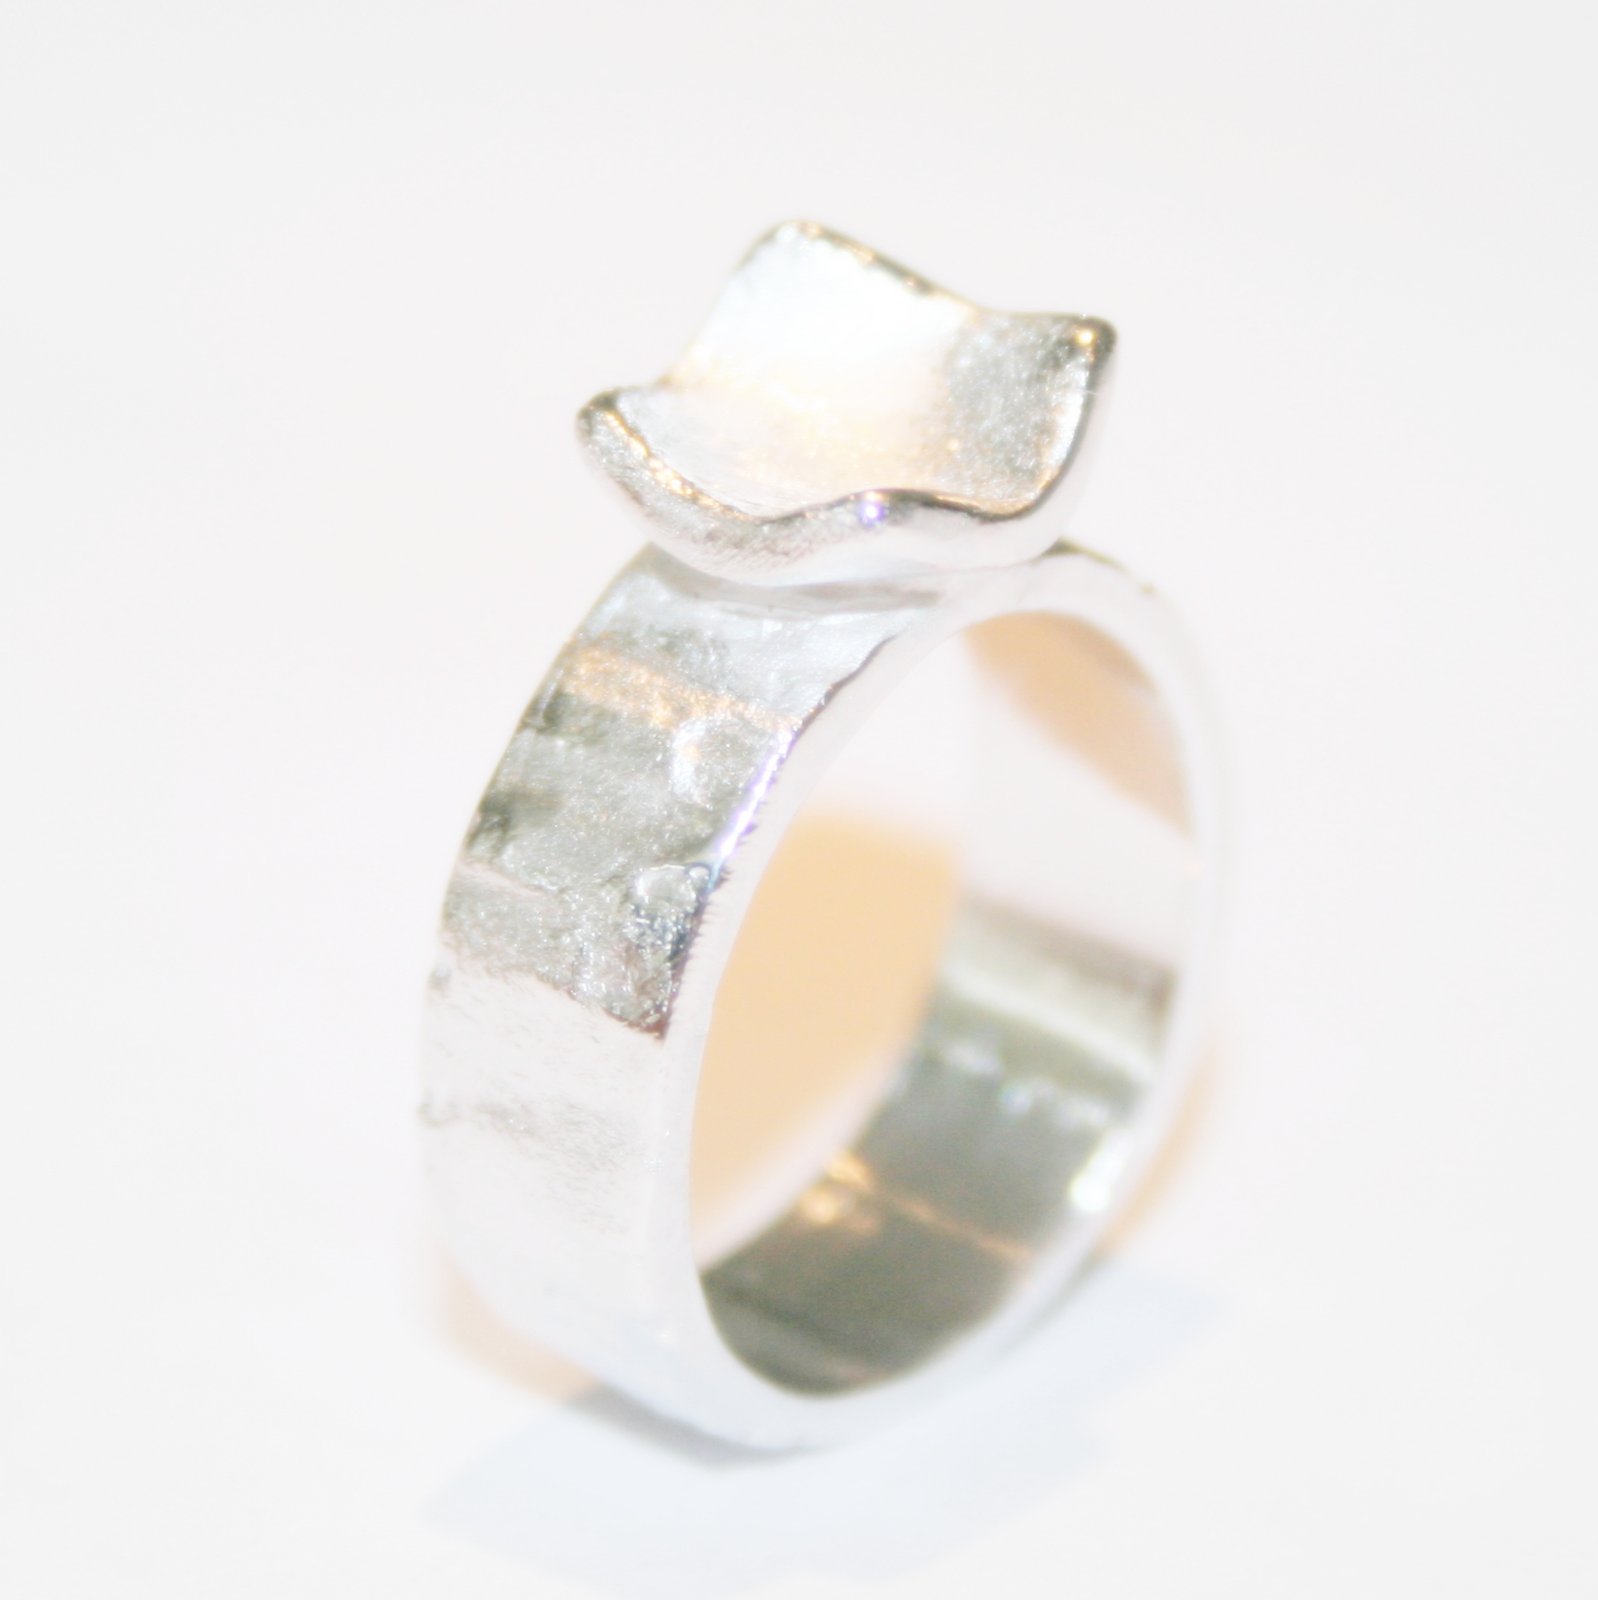 Sieraden Ringen Banden 9k gouden trouwring 4mm breed handgemaakte ring 